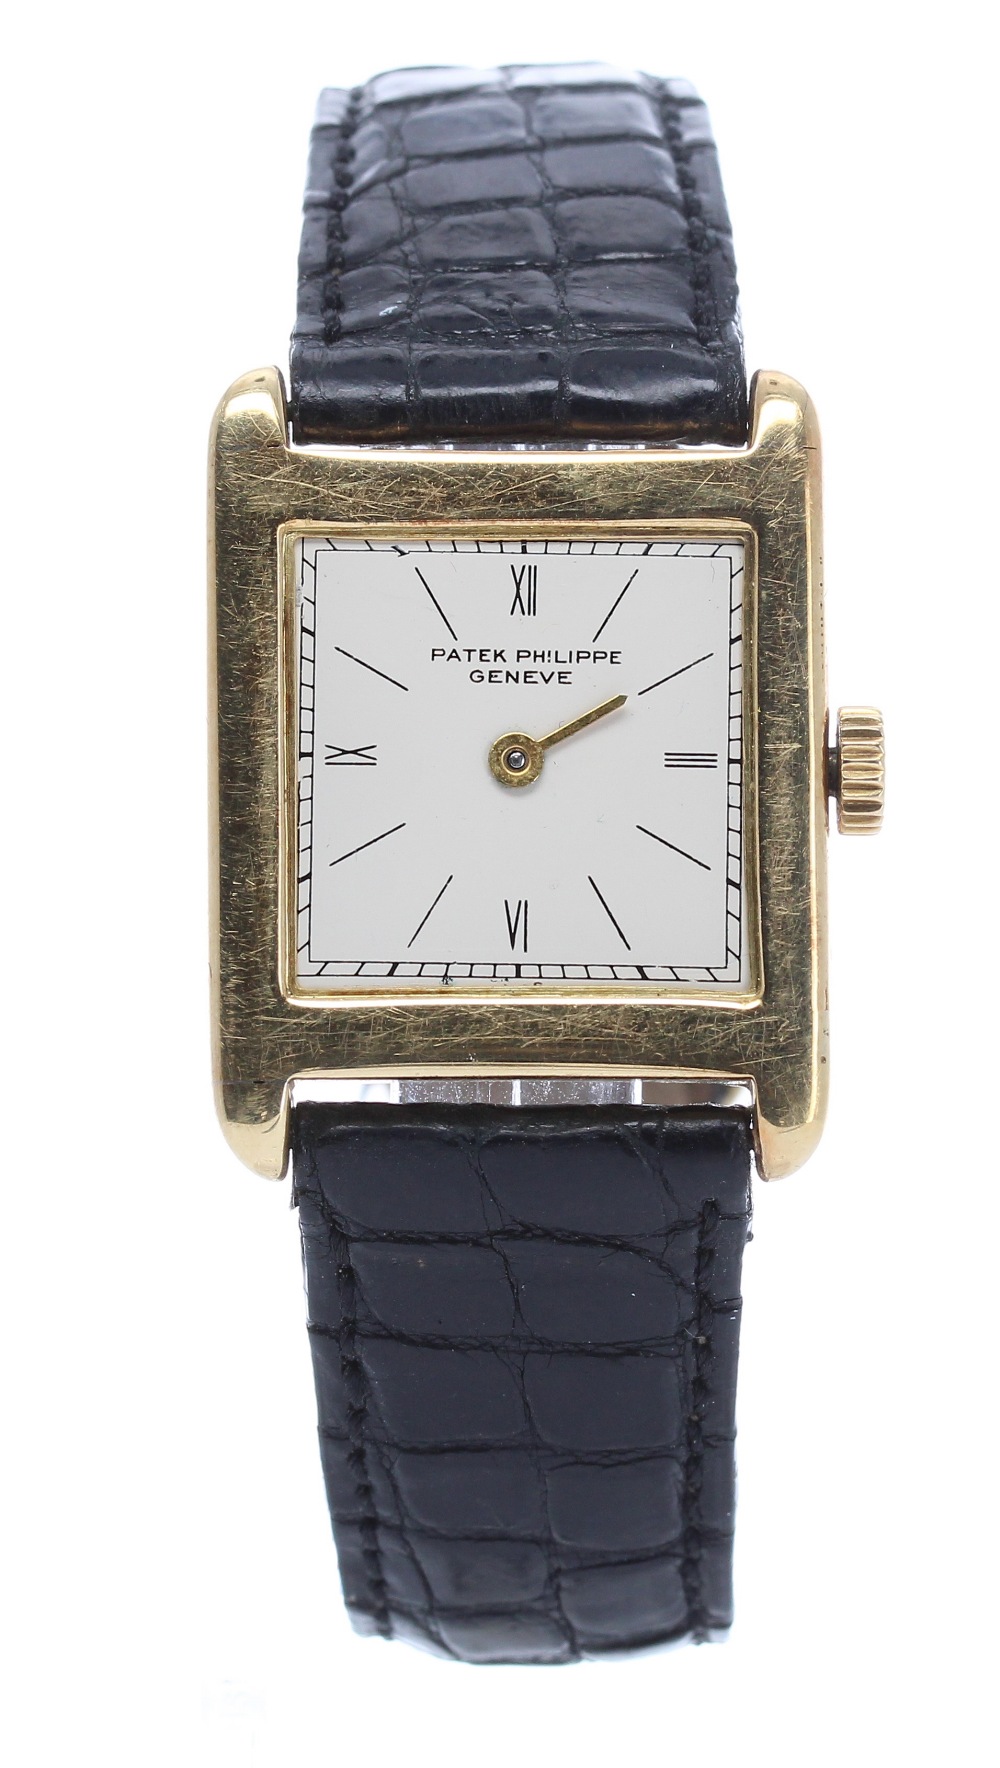 Patek Philippe, Geneve 18ct Gondolo gentleman's wristwatch of tank form, case no. 616498, movement